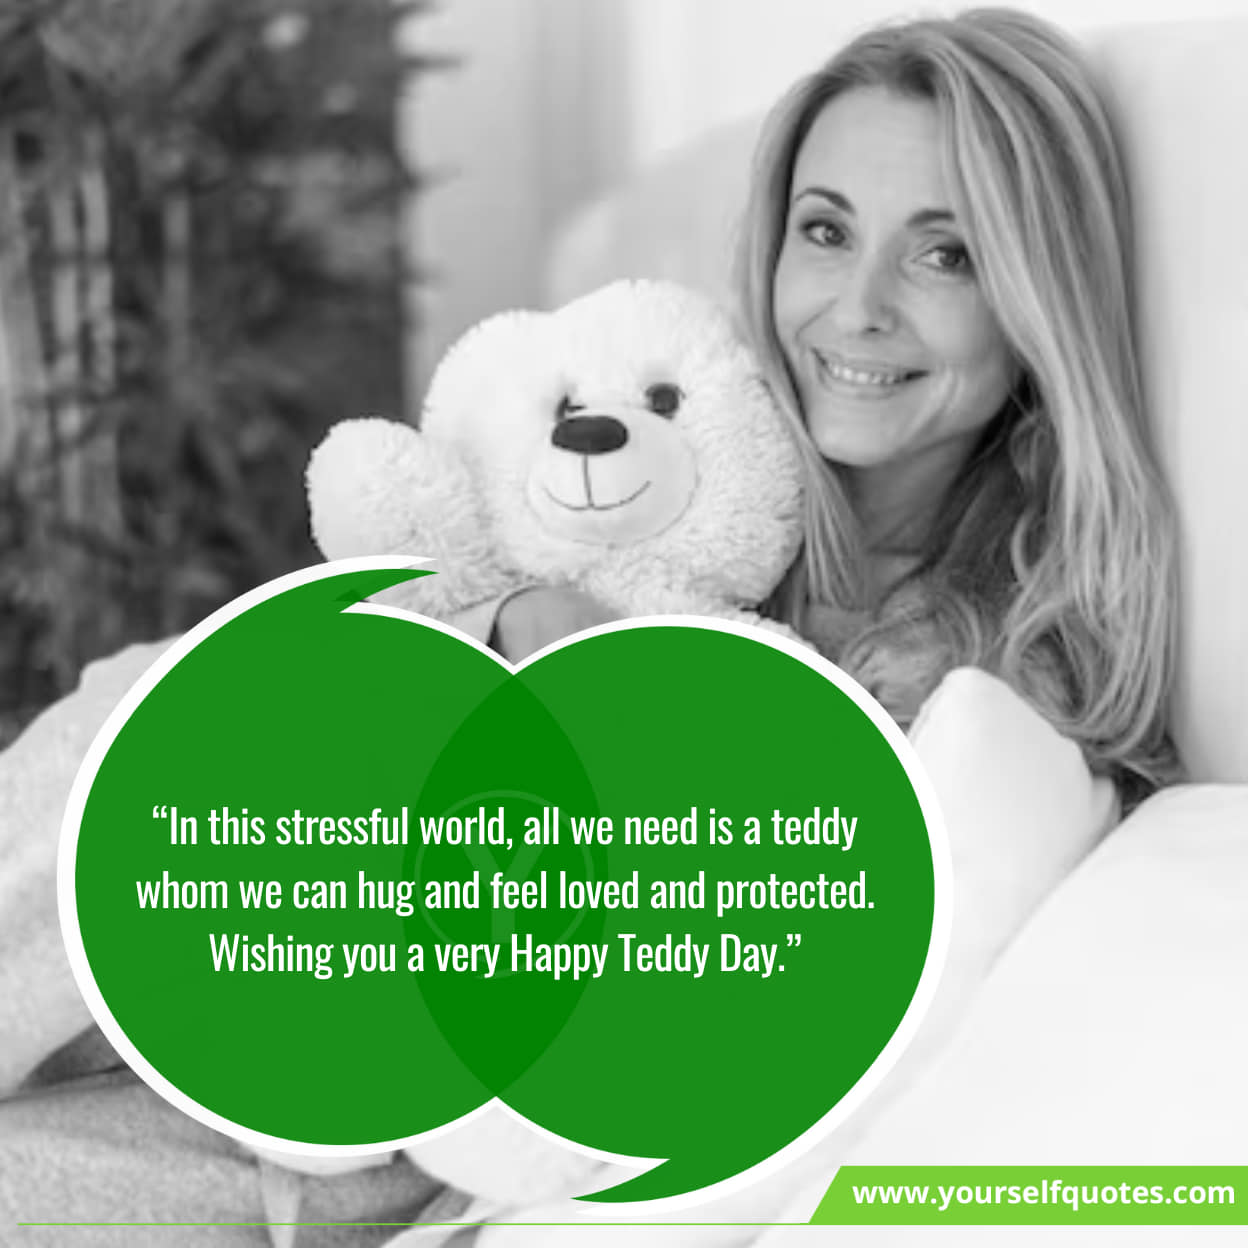 Heartwarming Teddy Day quotes